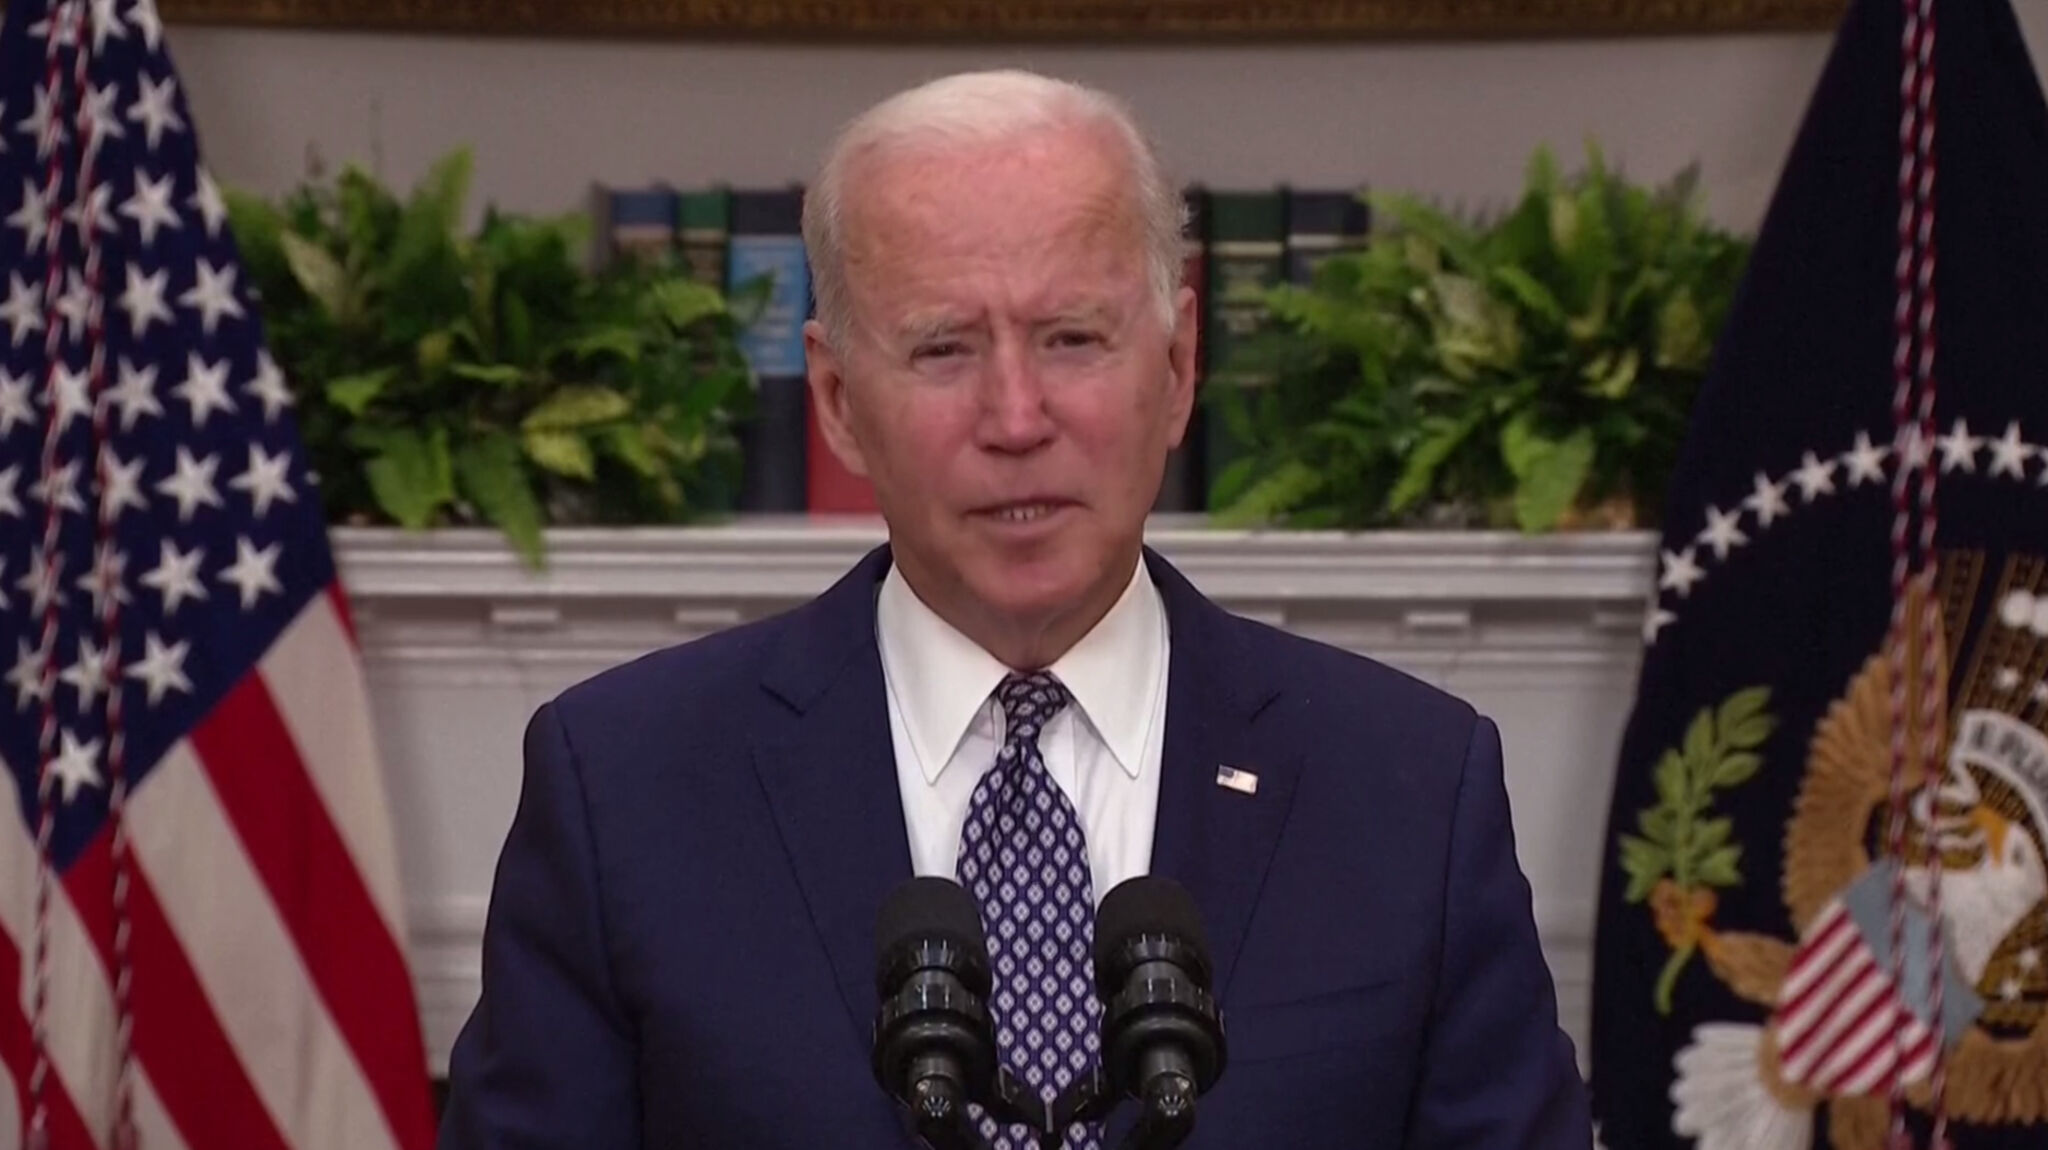 Joe Biden won't extend Afghanistan evacuation - VG